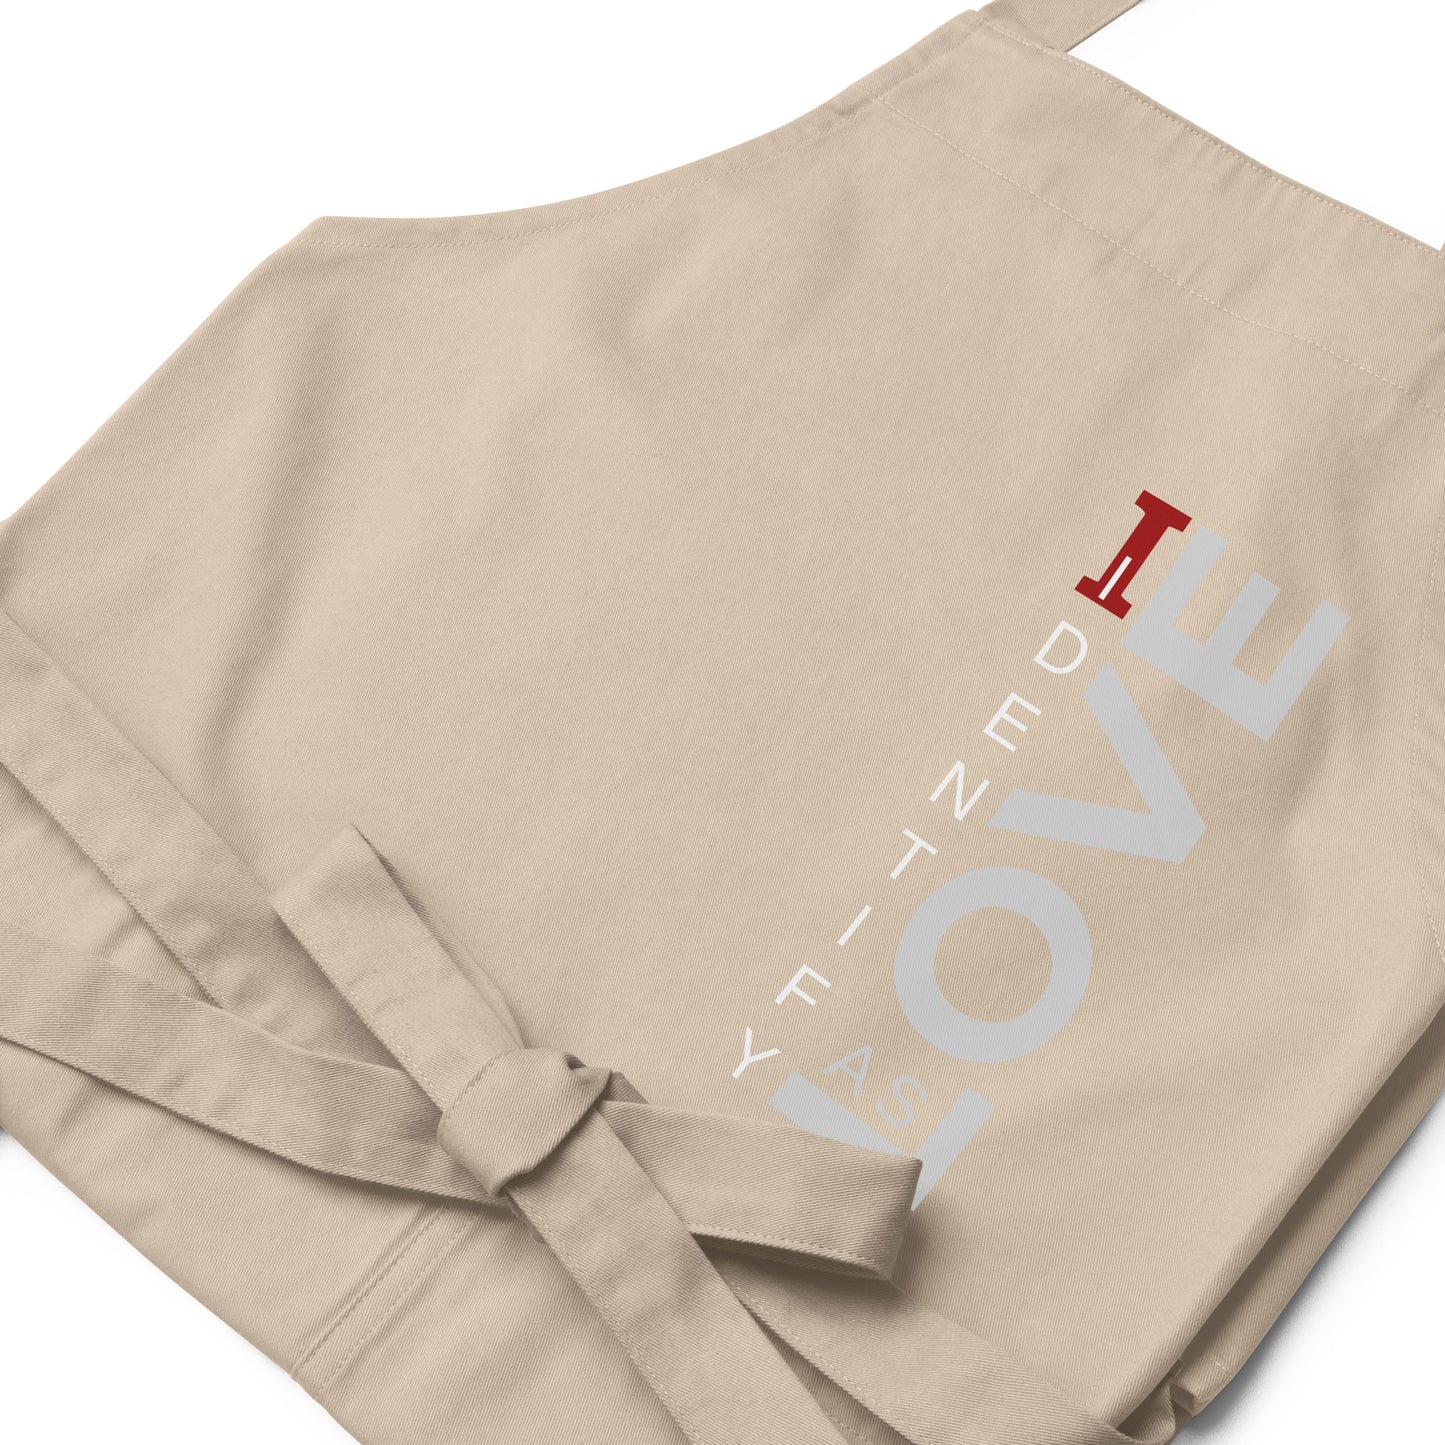 Identify As Love Organic cotton apron